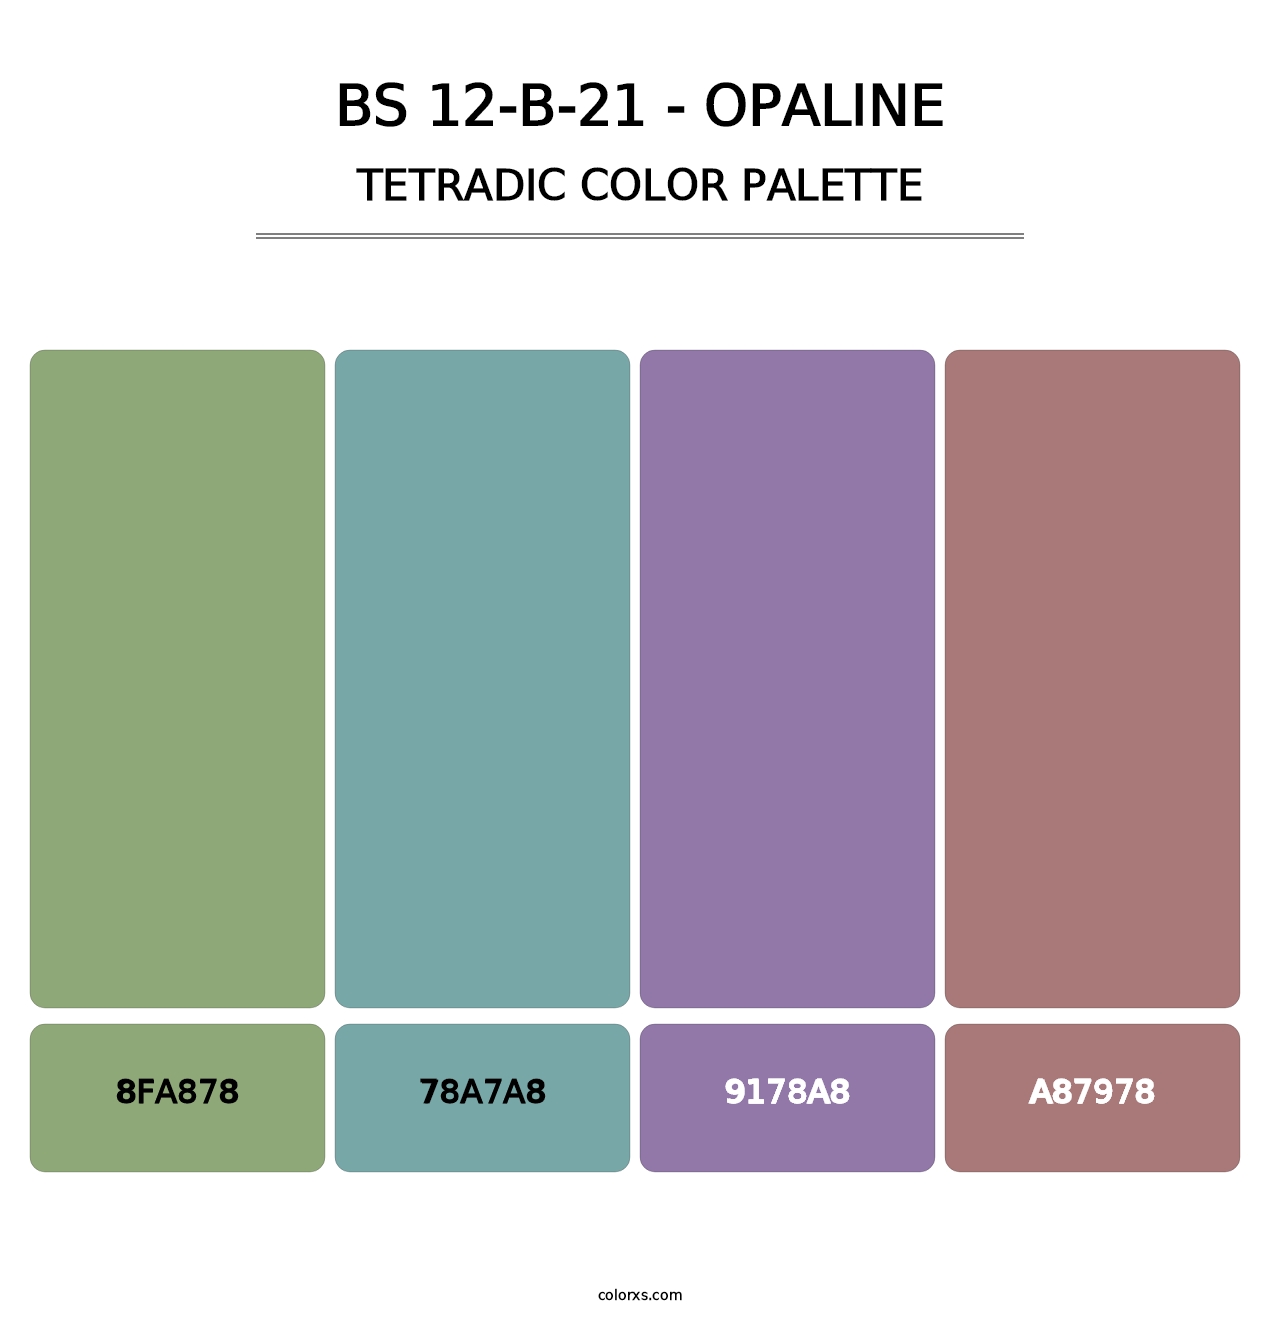 BS 12-B-21 - Opaline - Tetradic Color Palette